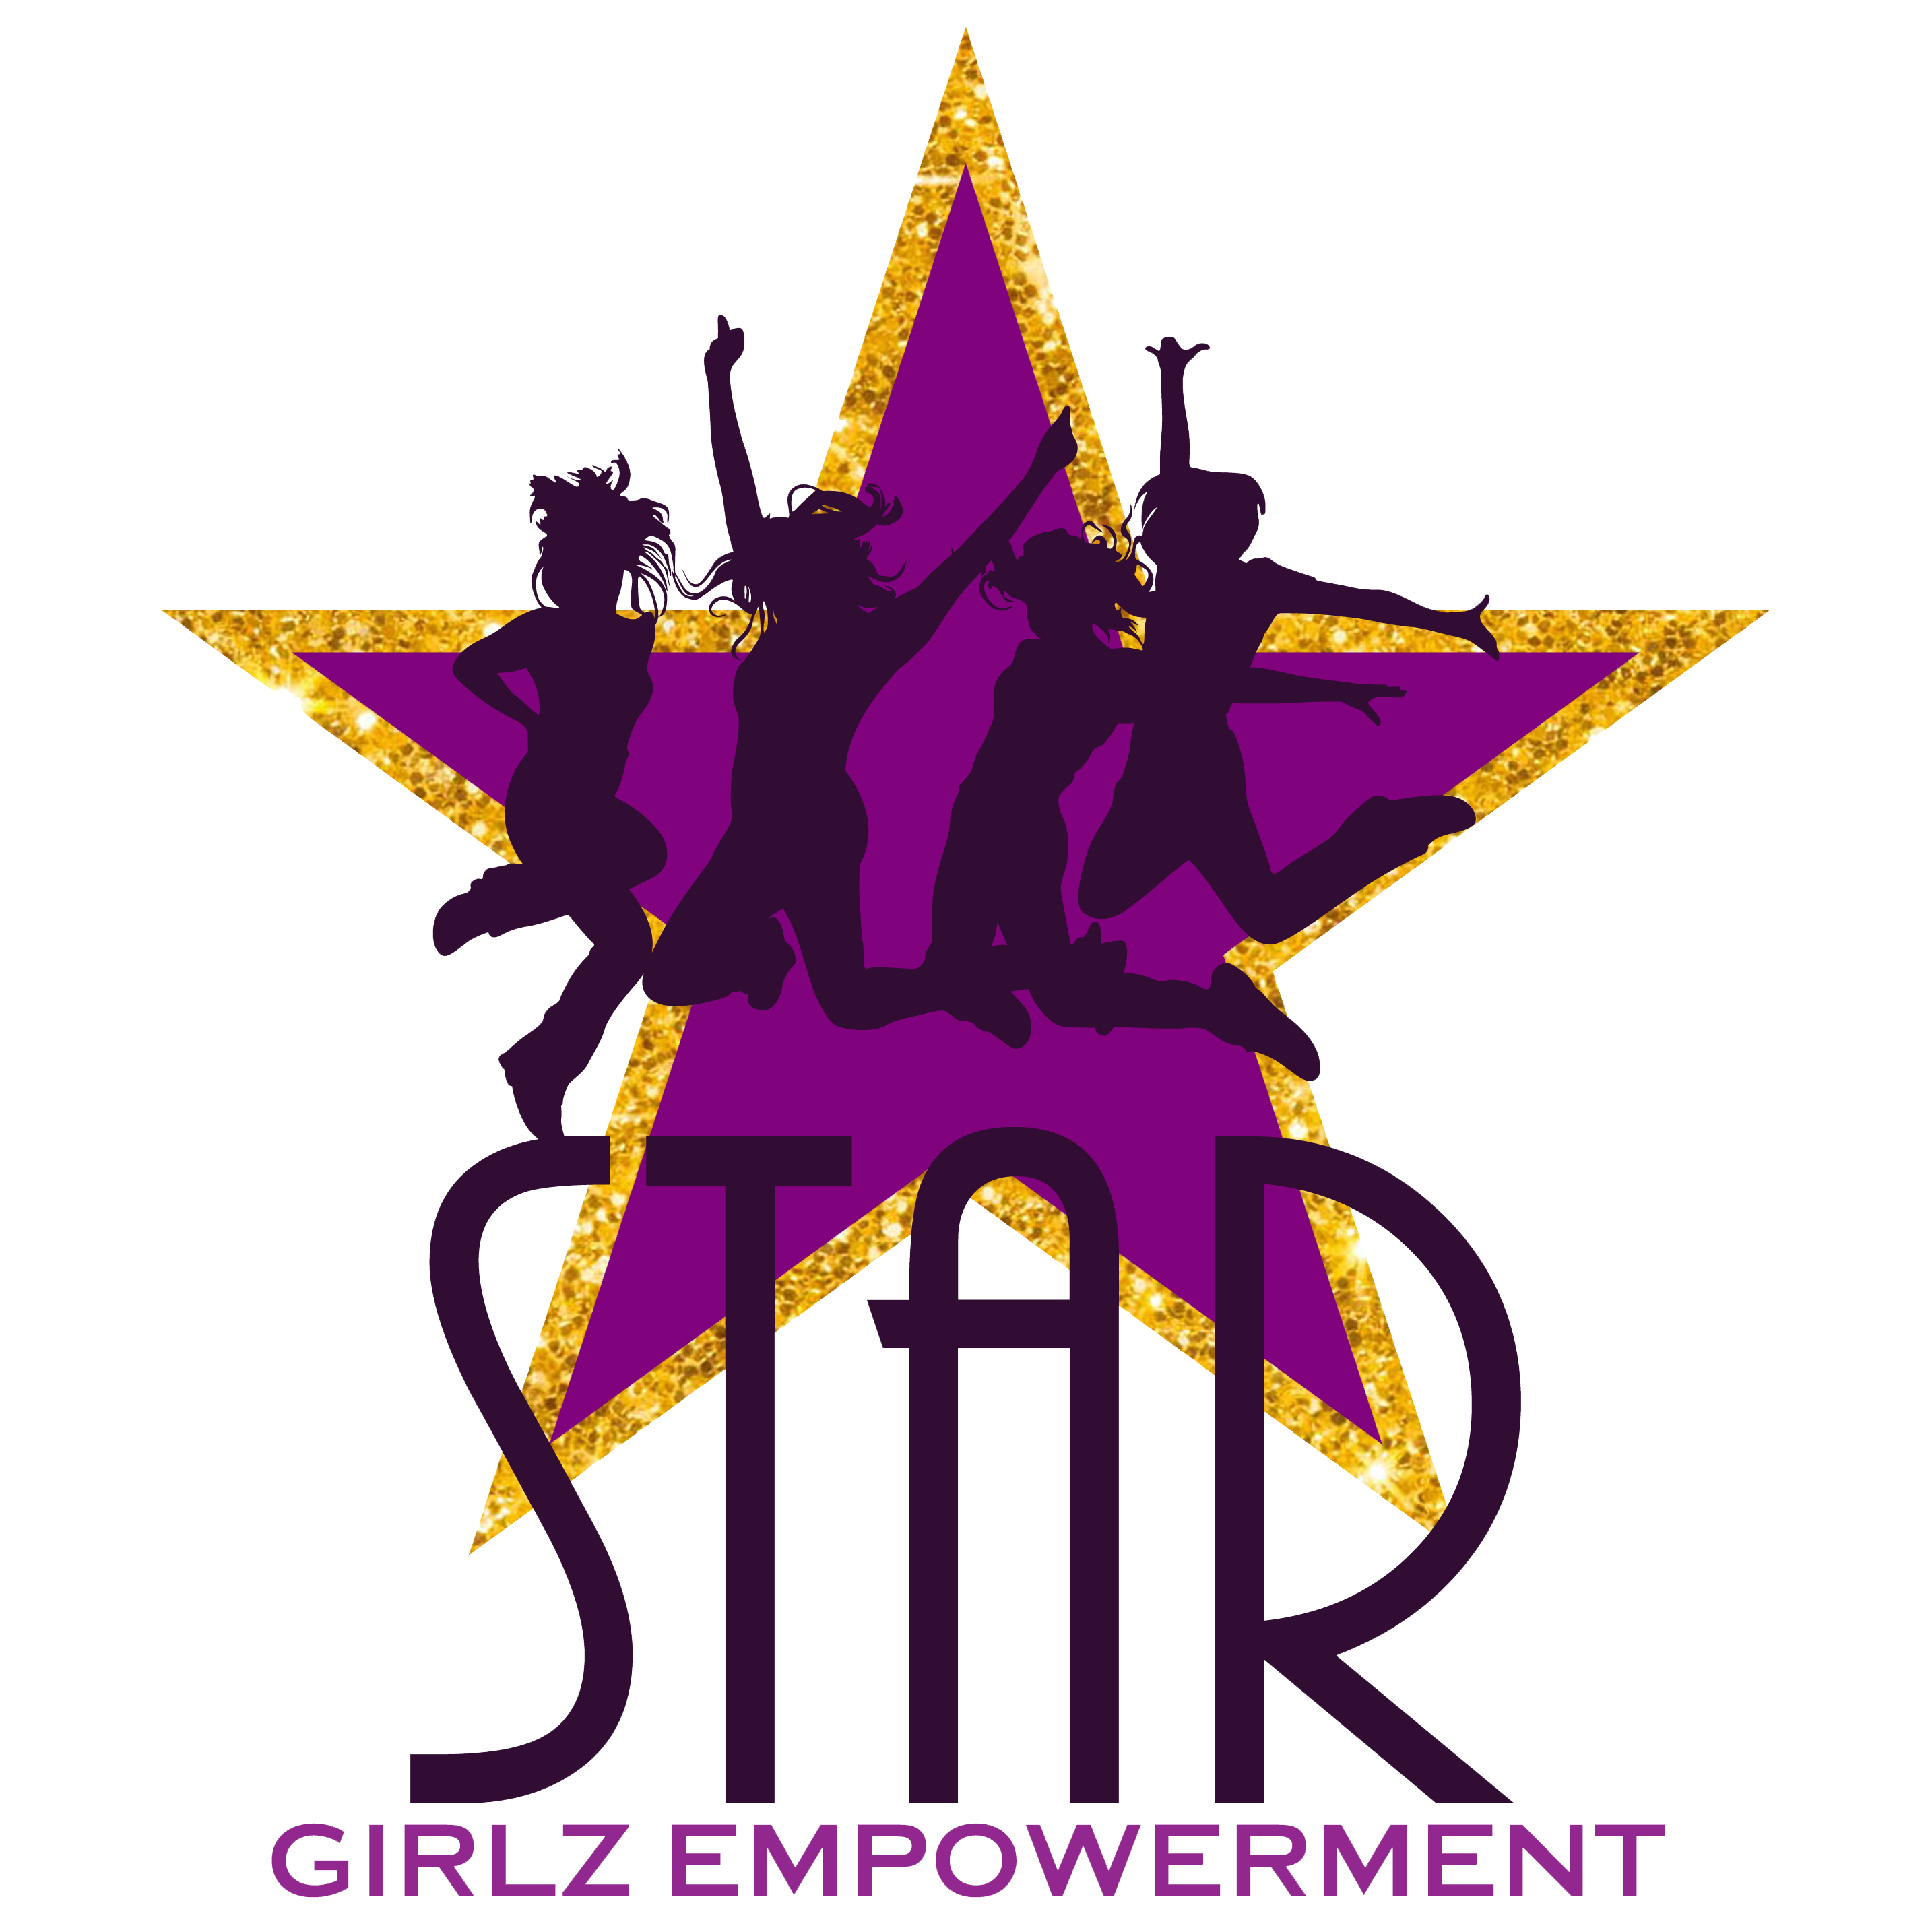 Star Girlz Empowerment